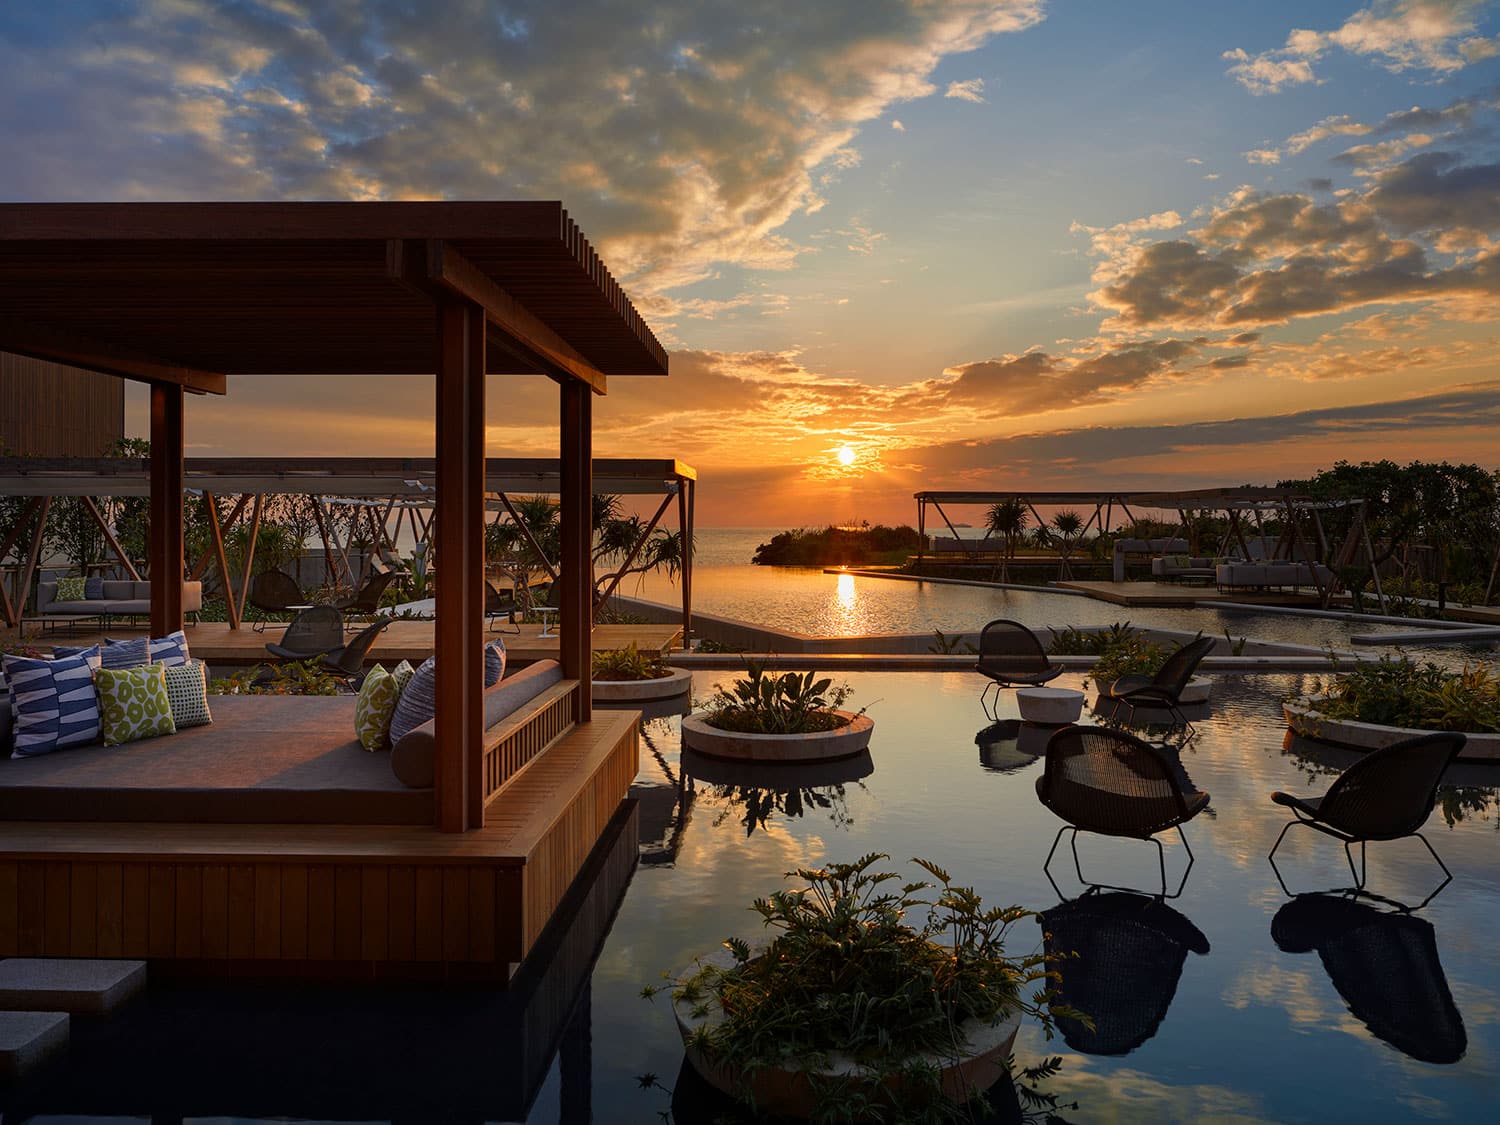 The view from the Hoshinoya Okinawa, Japan, resort’s Infinity Pool at sunset.